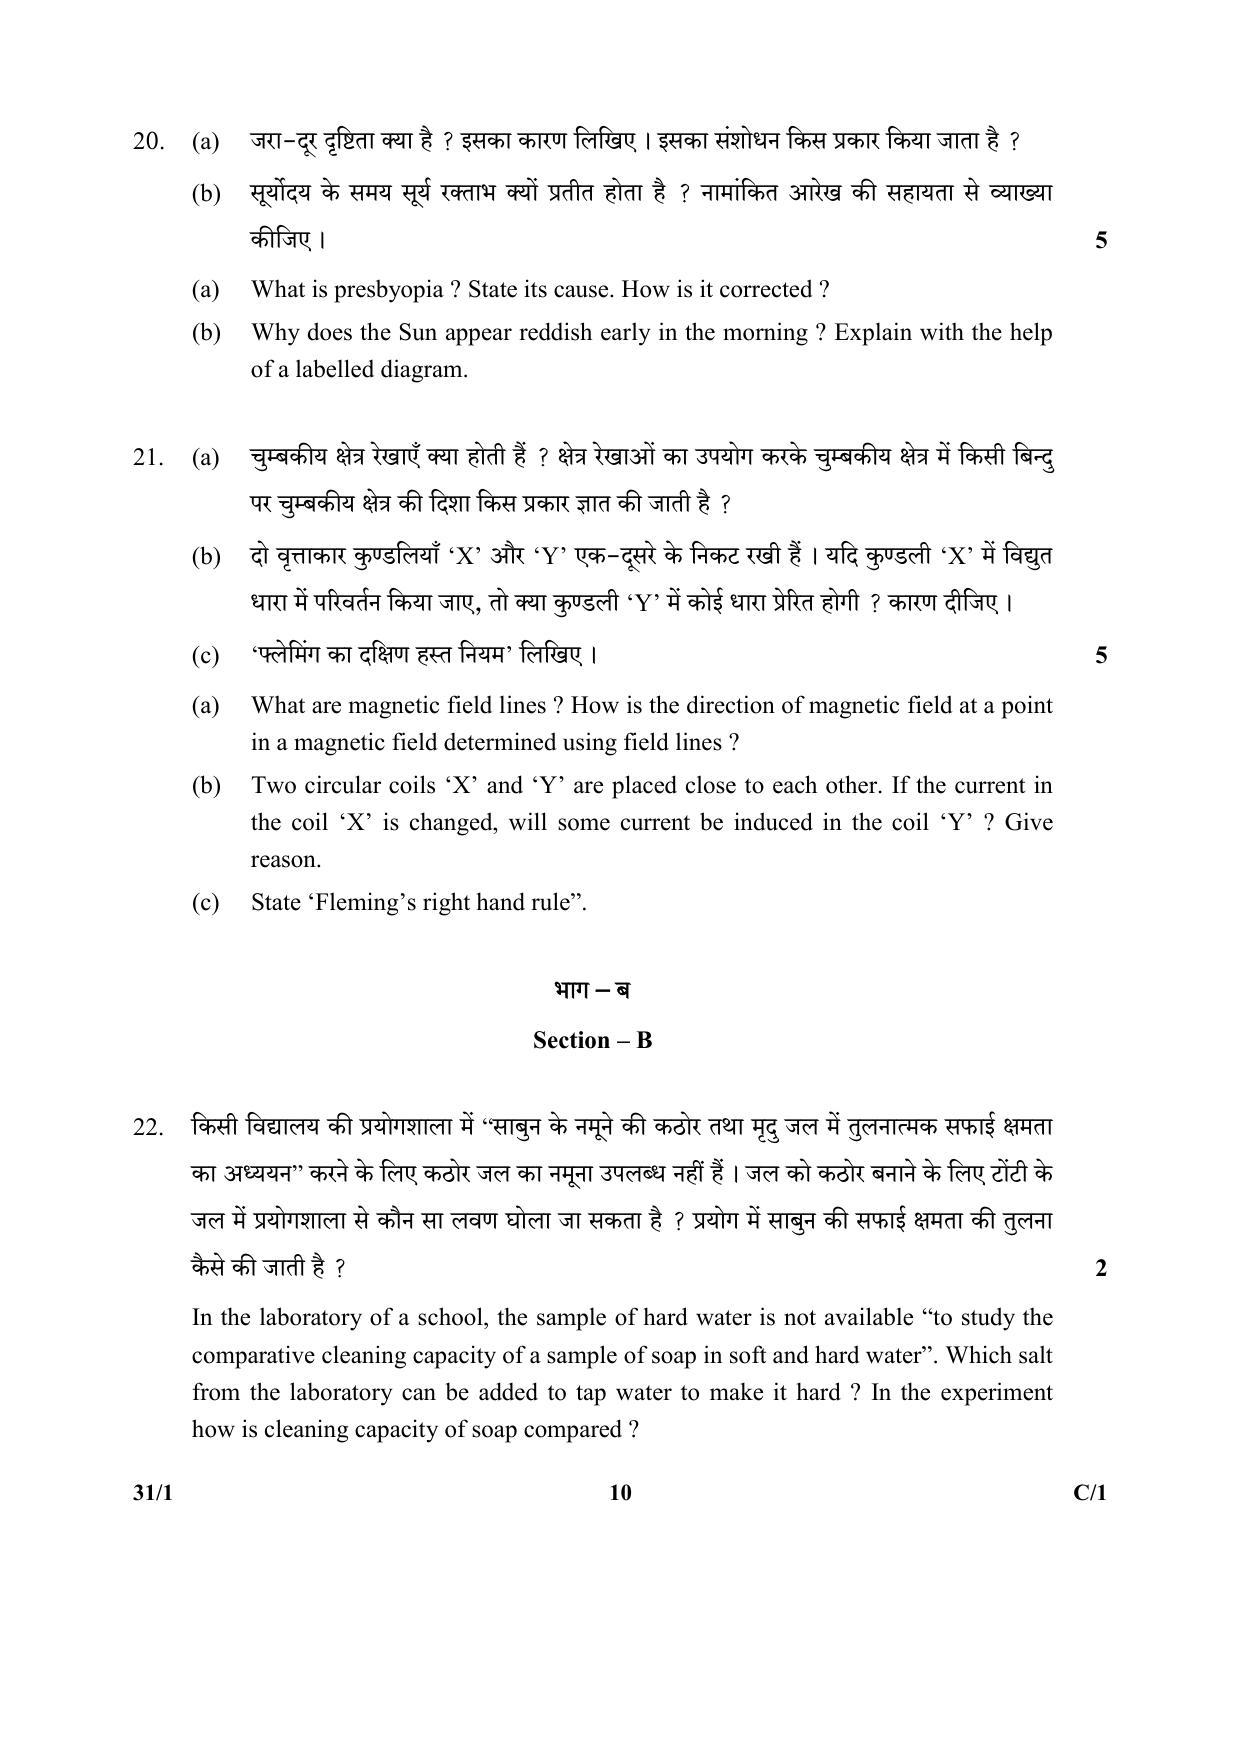 CBSE Class 10 41-1 Science PUNJABI VERSION 2018 Compartment Question Paper - Page 18